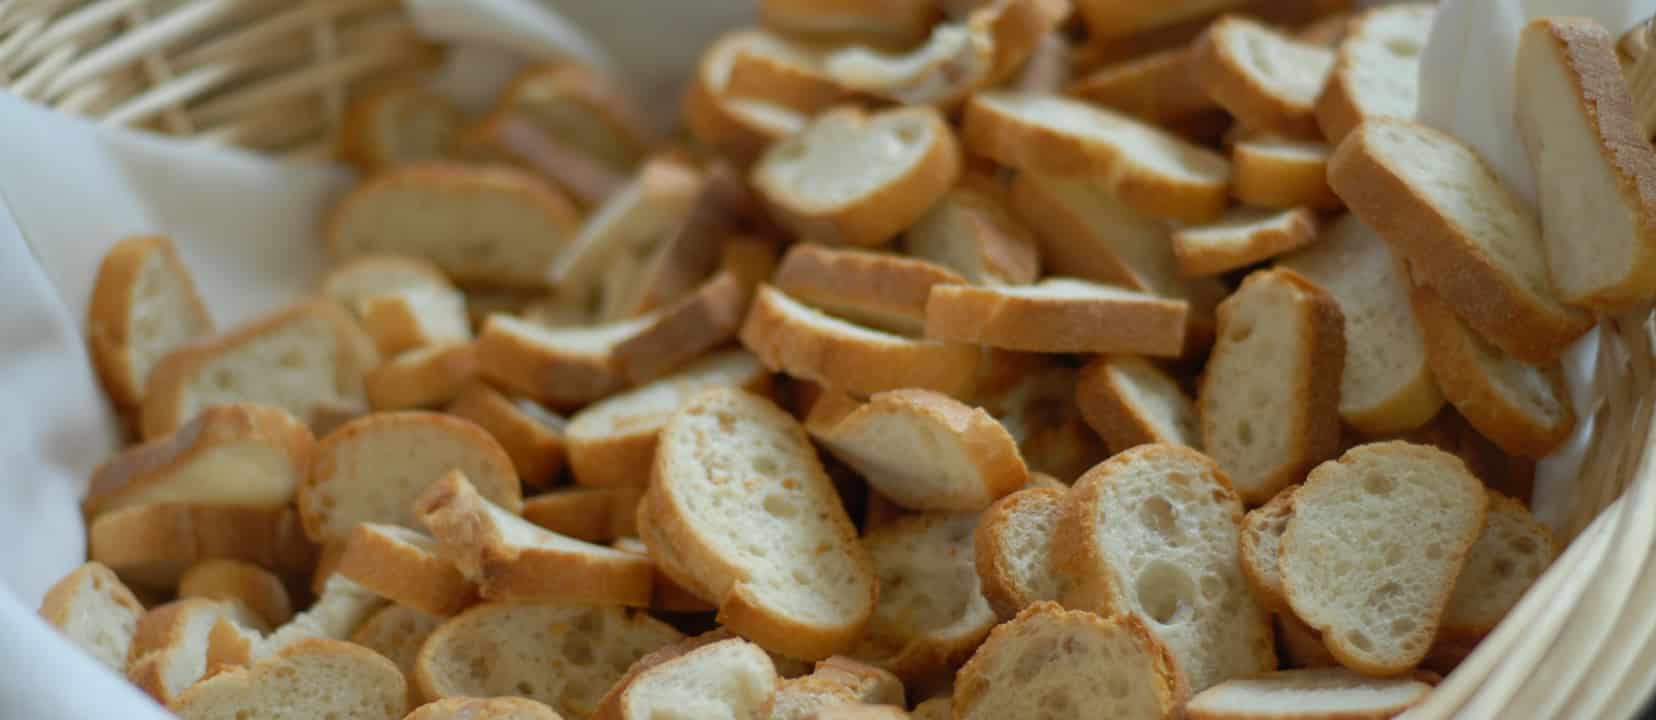 Is Gluten Sensitivity Real?